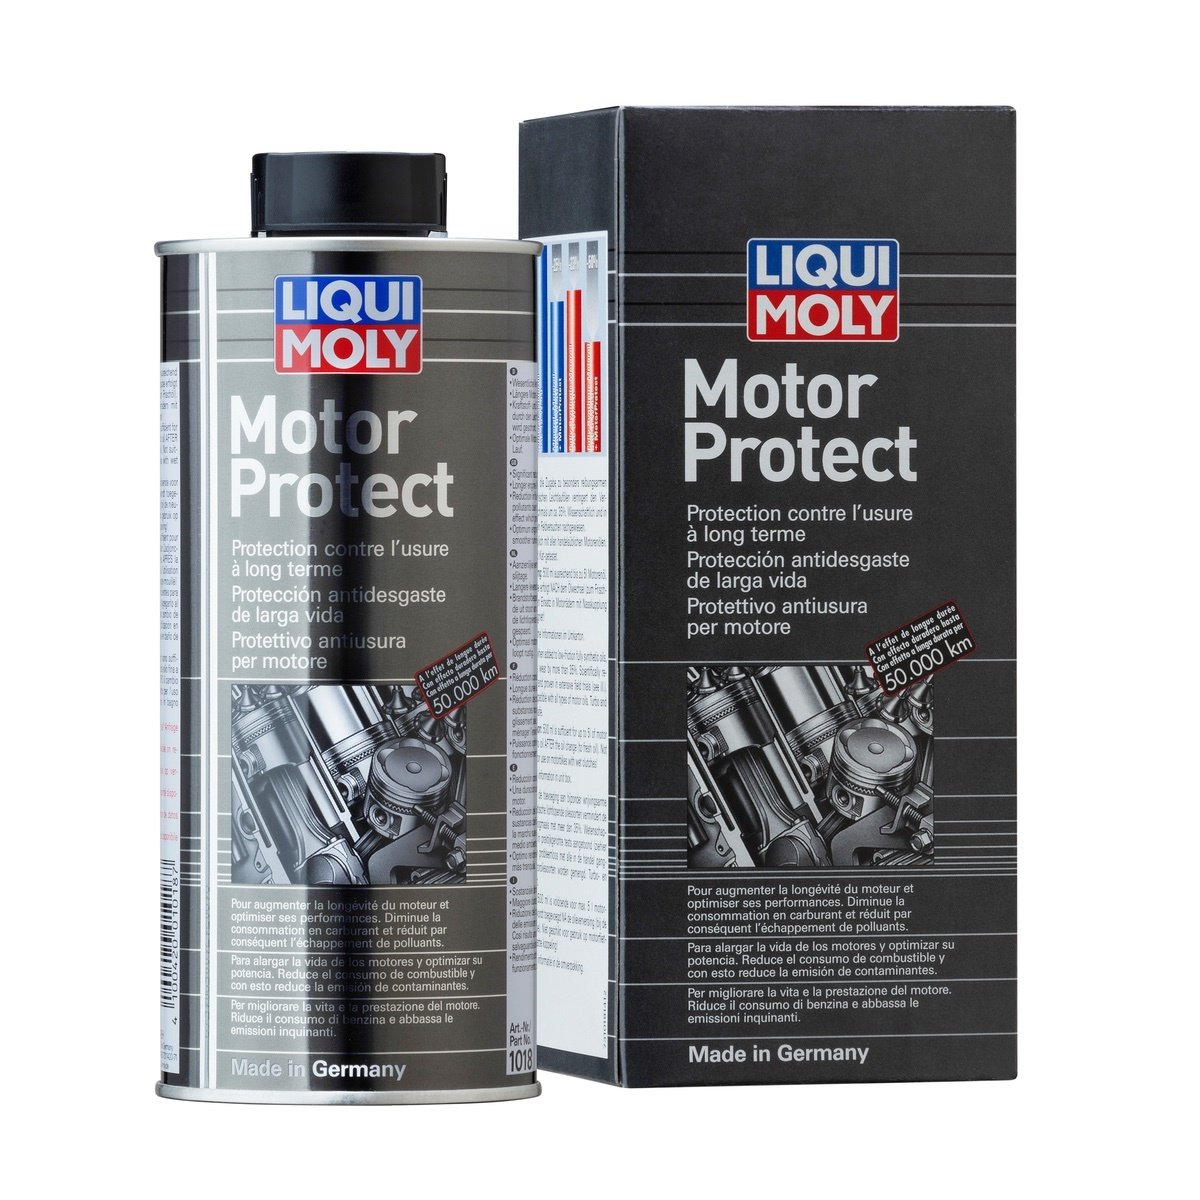 LIQUI MOLY 1018 | Motor Protect Sentetik Motor Koruma Yağ Katkısı 500 ml (1018)